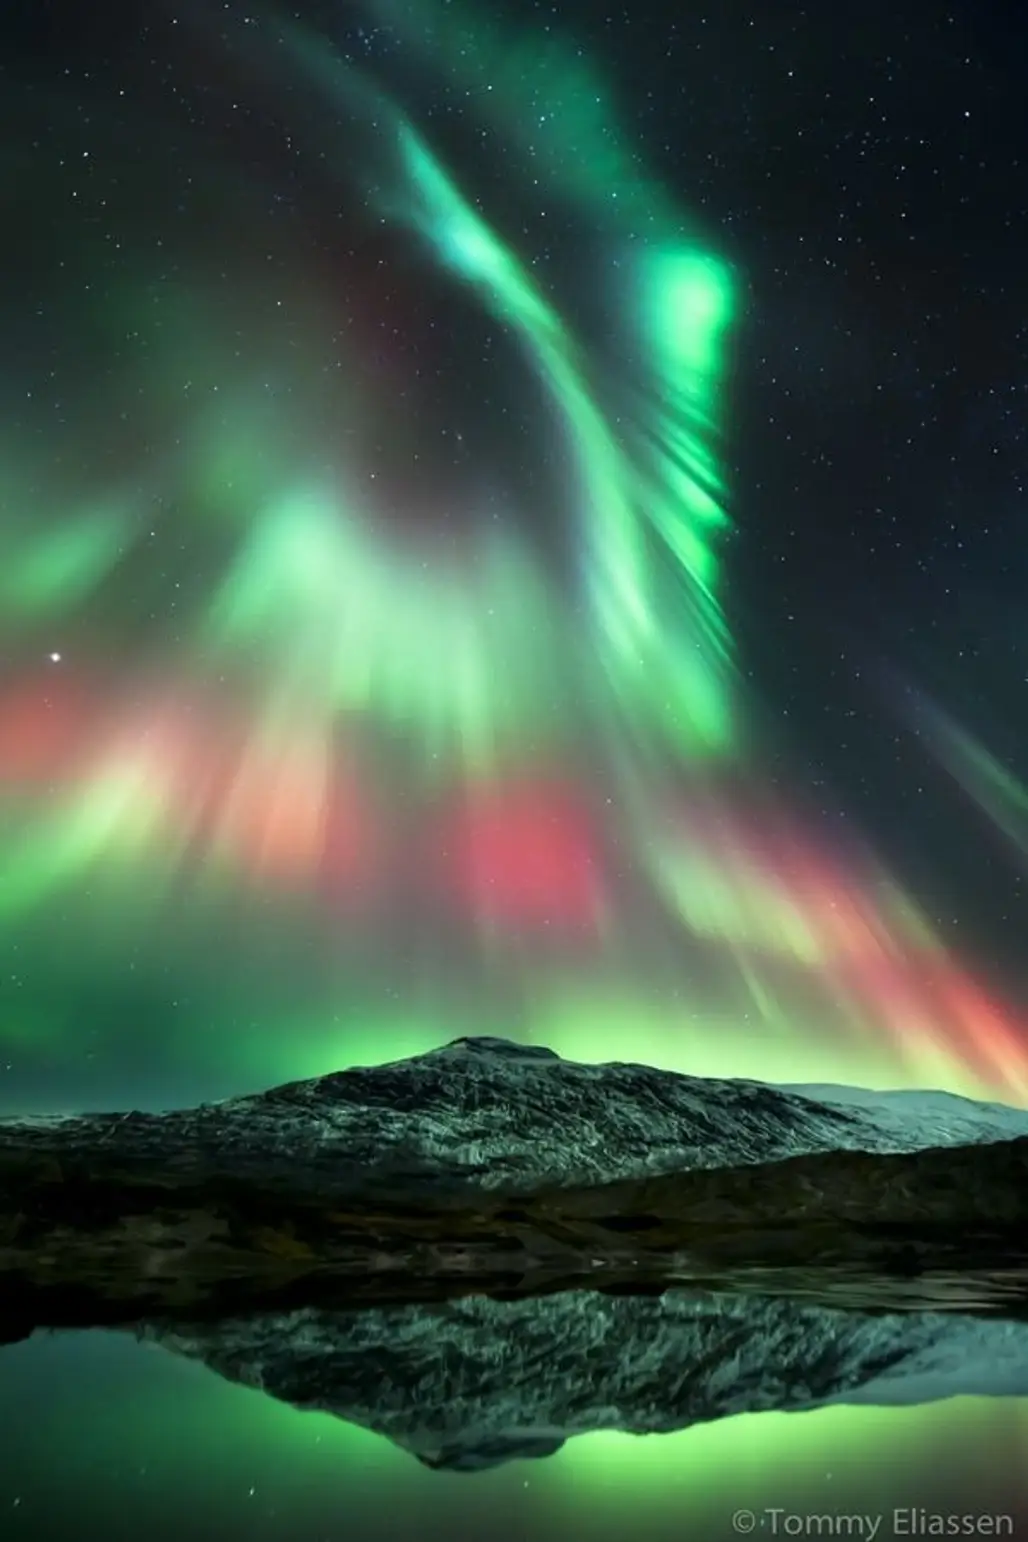 Stunning Aurora Borealis Photo